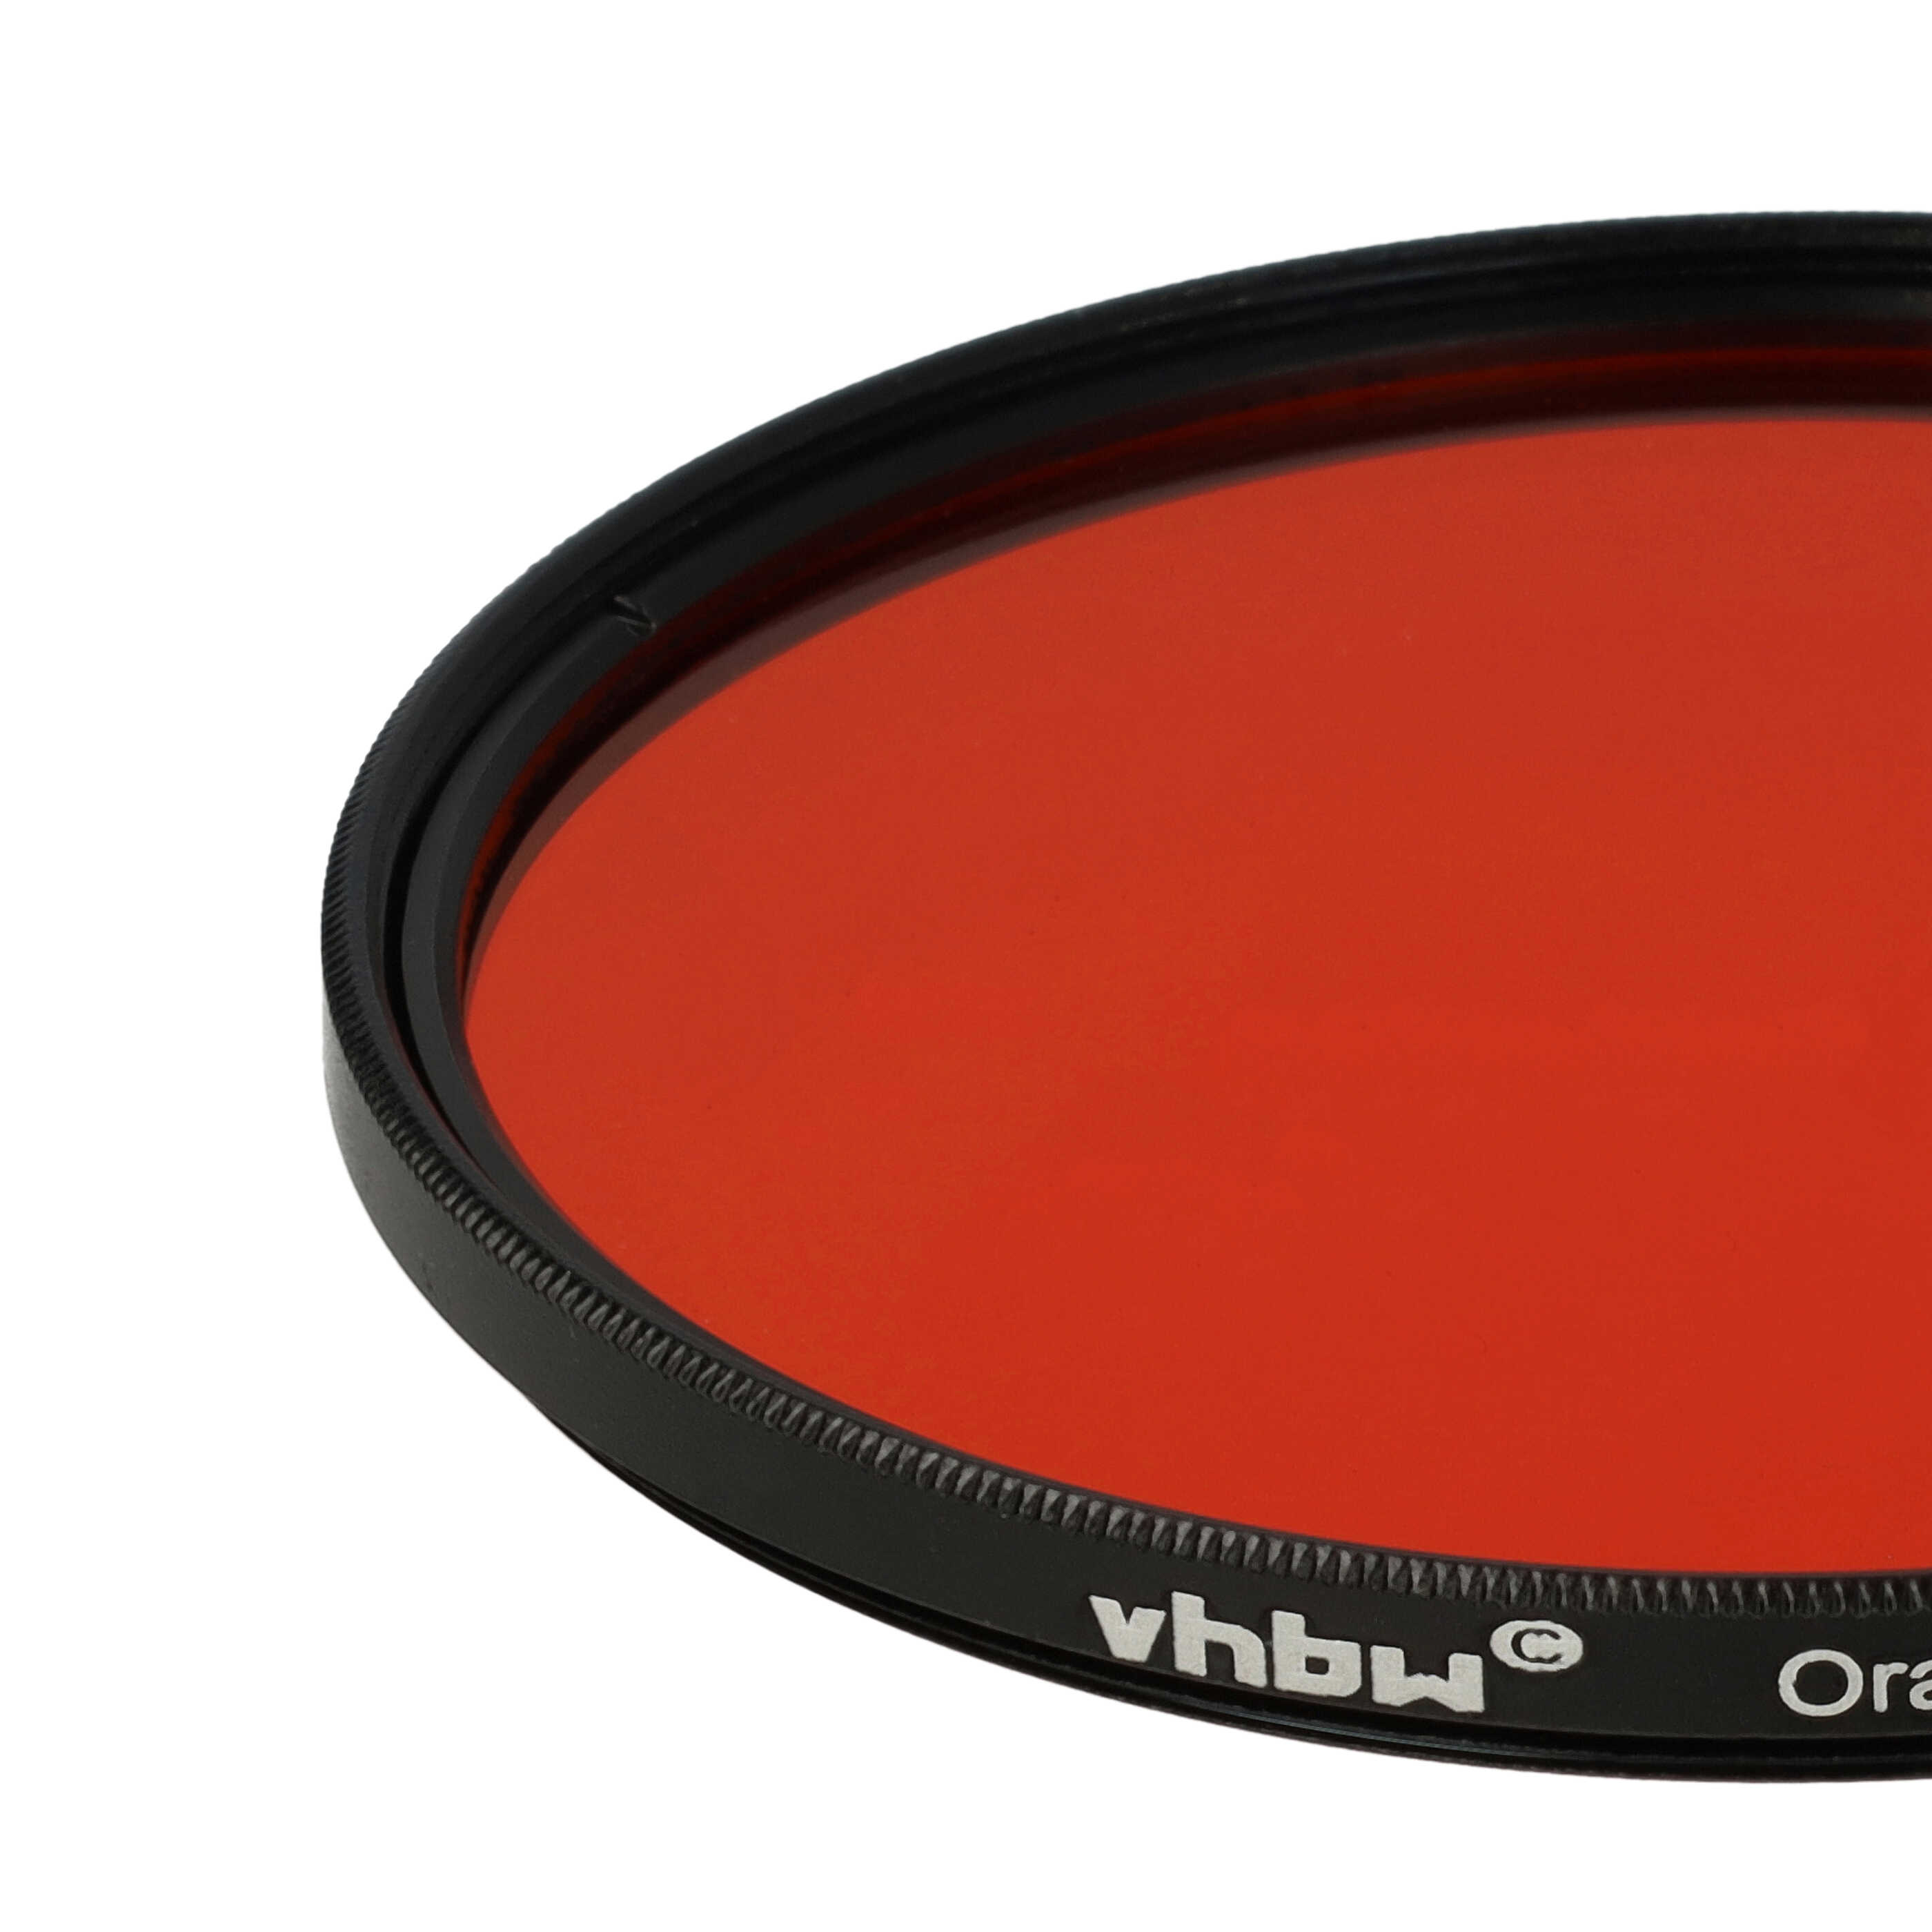 Coloured Filter, Orange suitable for Camera Lenses with 72 mm Filter Thread - Orange Filter